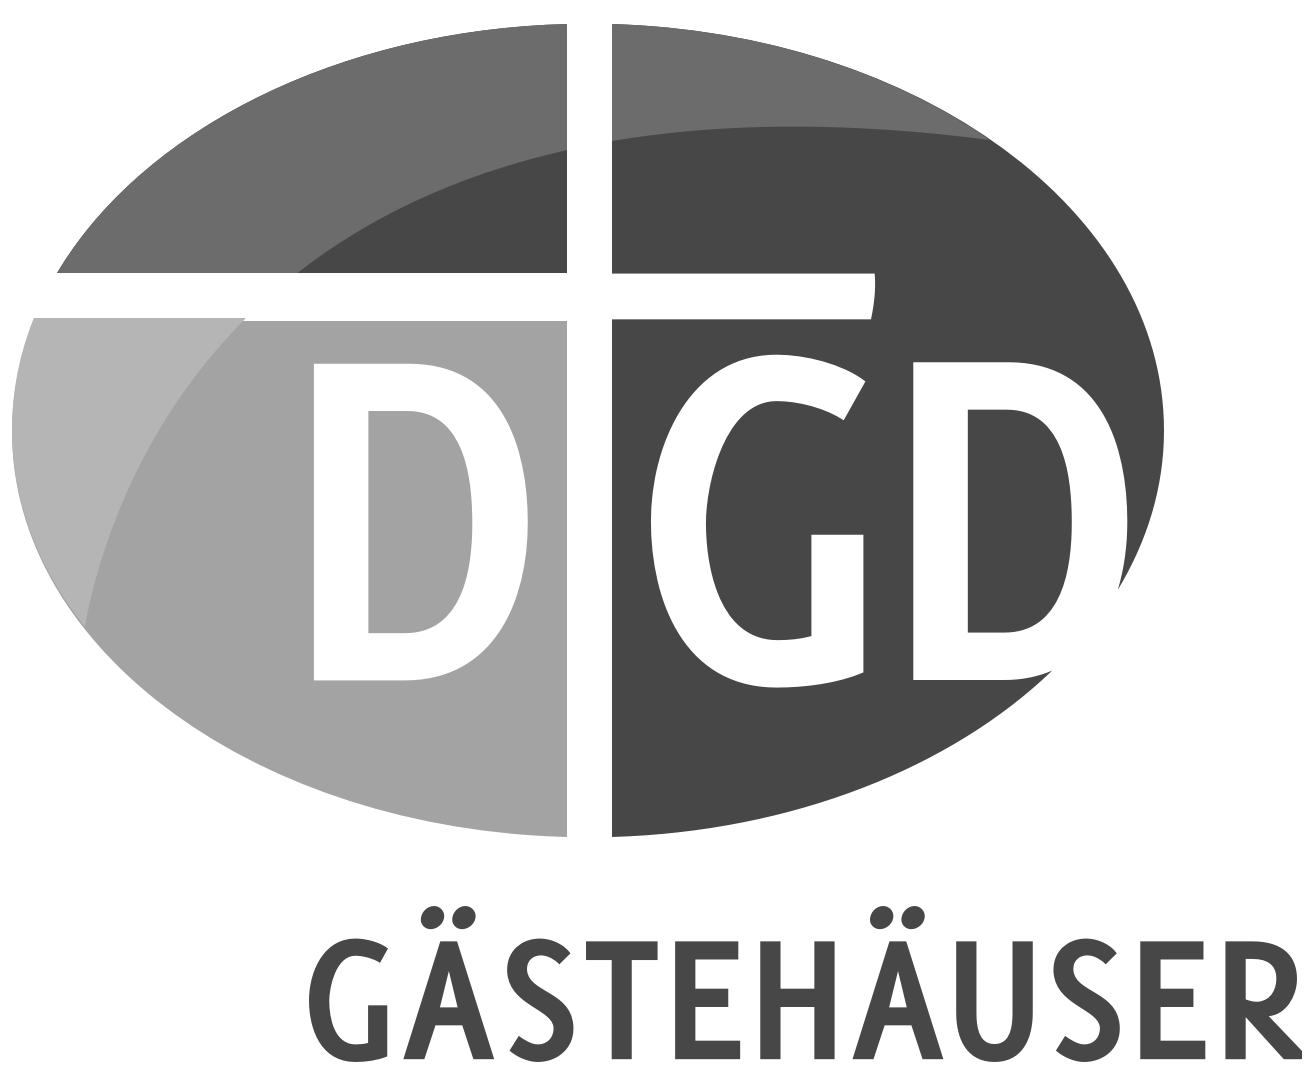 Logo DGD